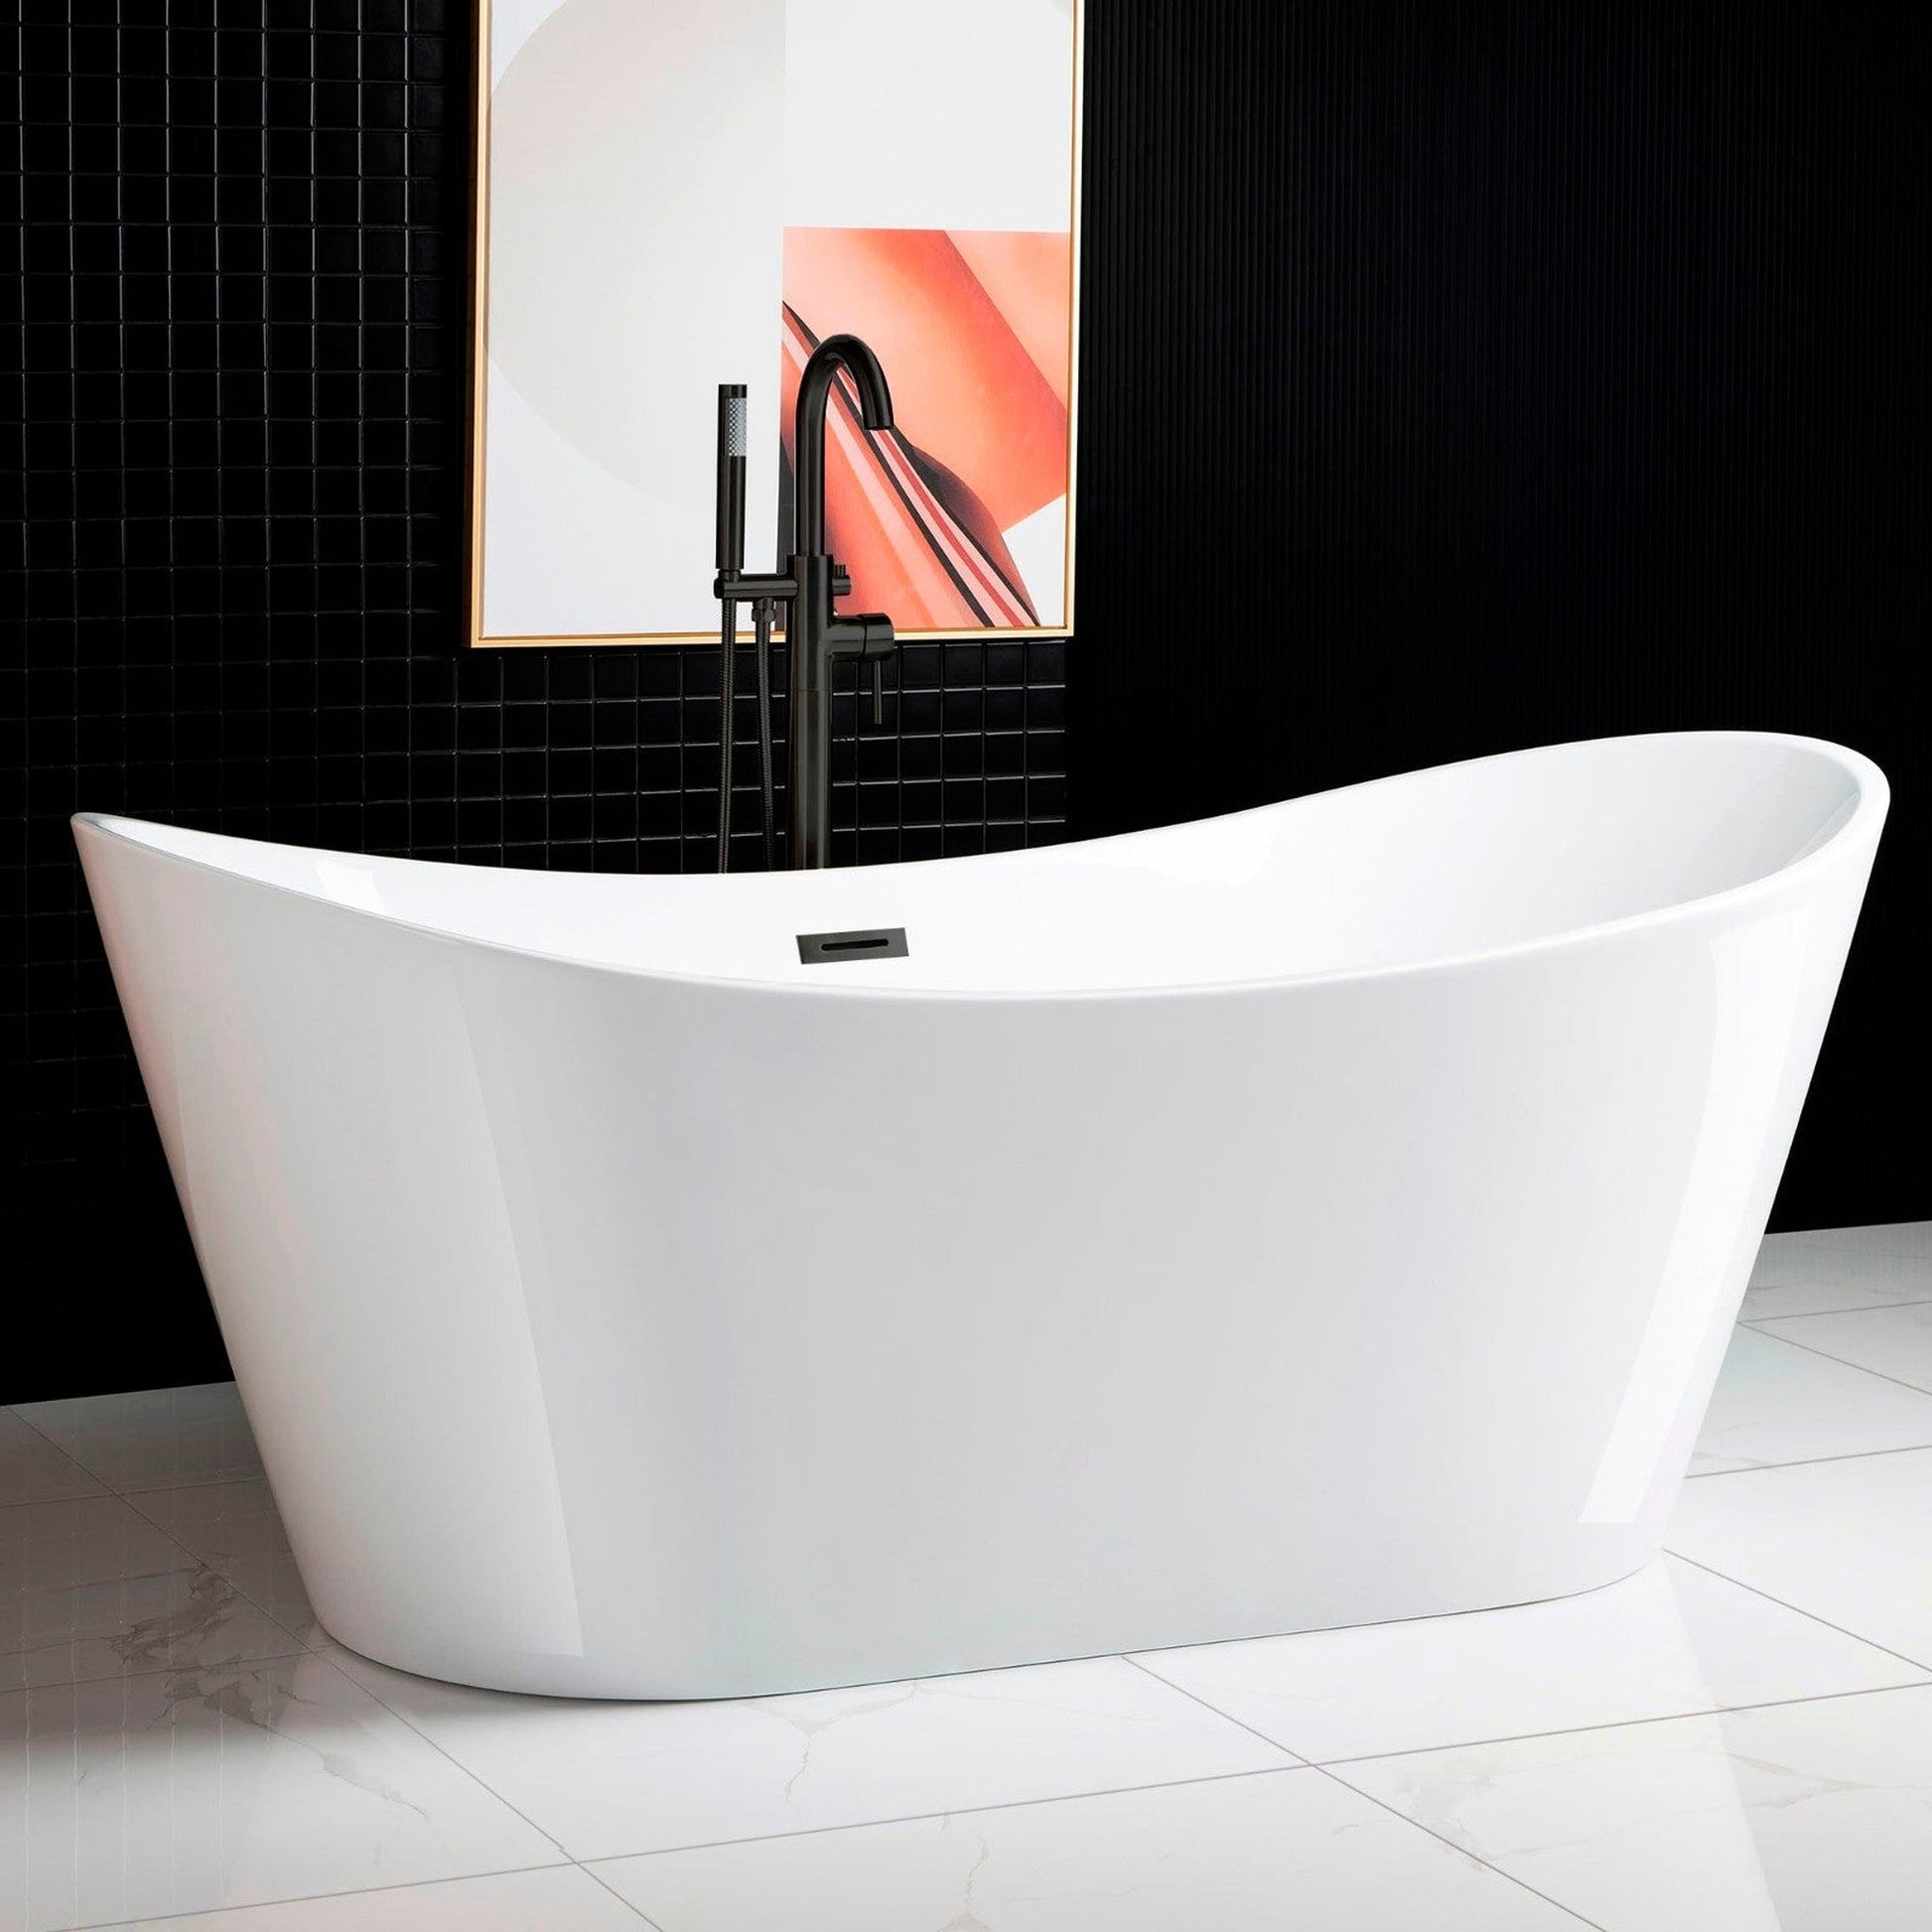 WoodBridge B0017 71" White Acrylic Freestanding Soaking Bathtub With Matte Black Drain, Overflow, F0072MBVT Tub Filler and Caddy Tray